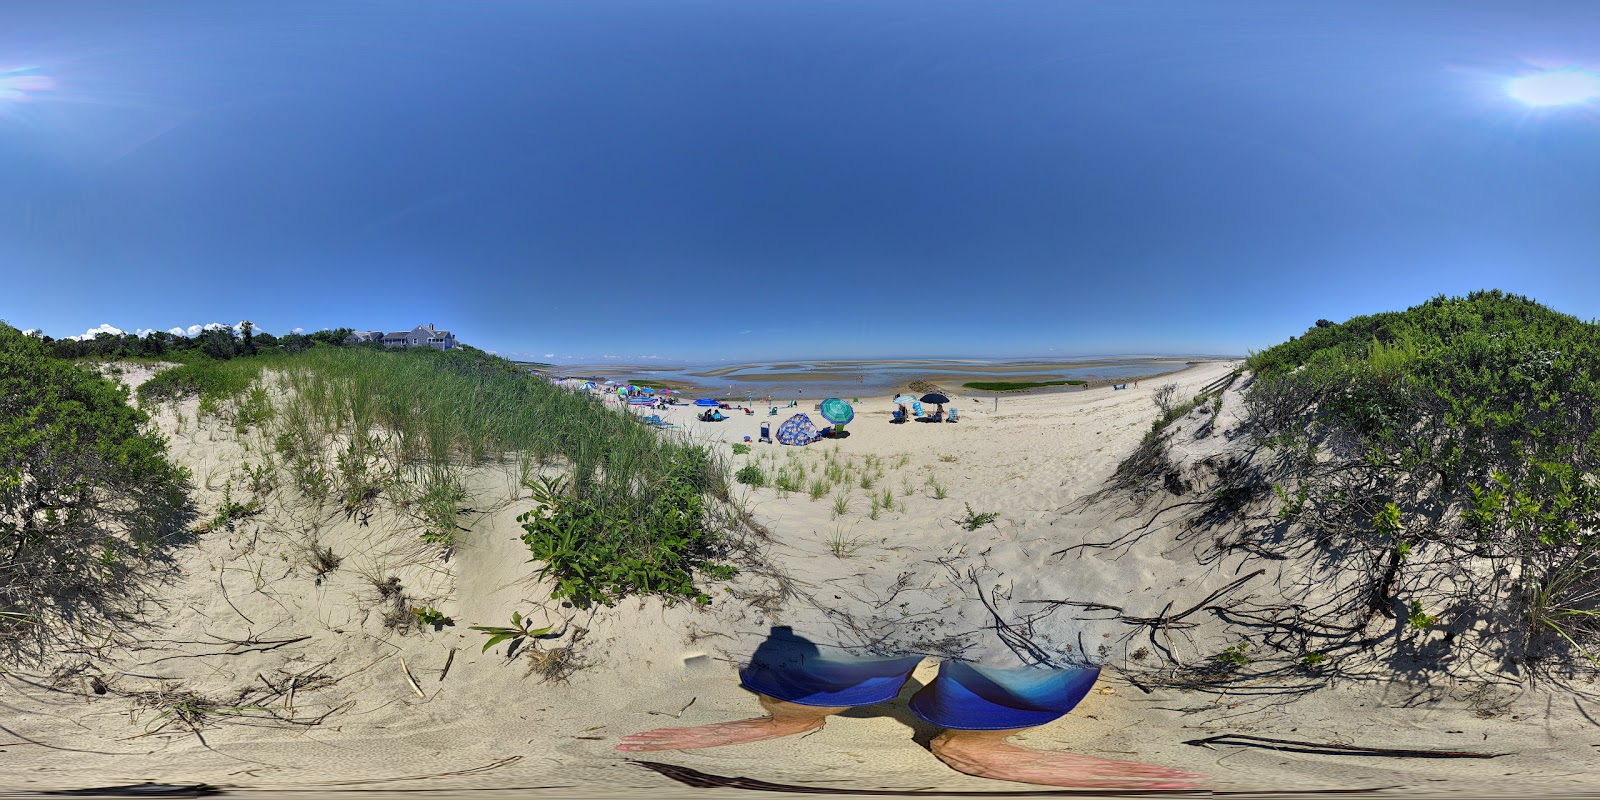 Foto av Mant's Landing beach med hög nivå av renlighet